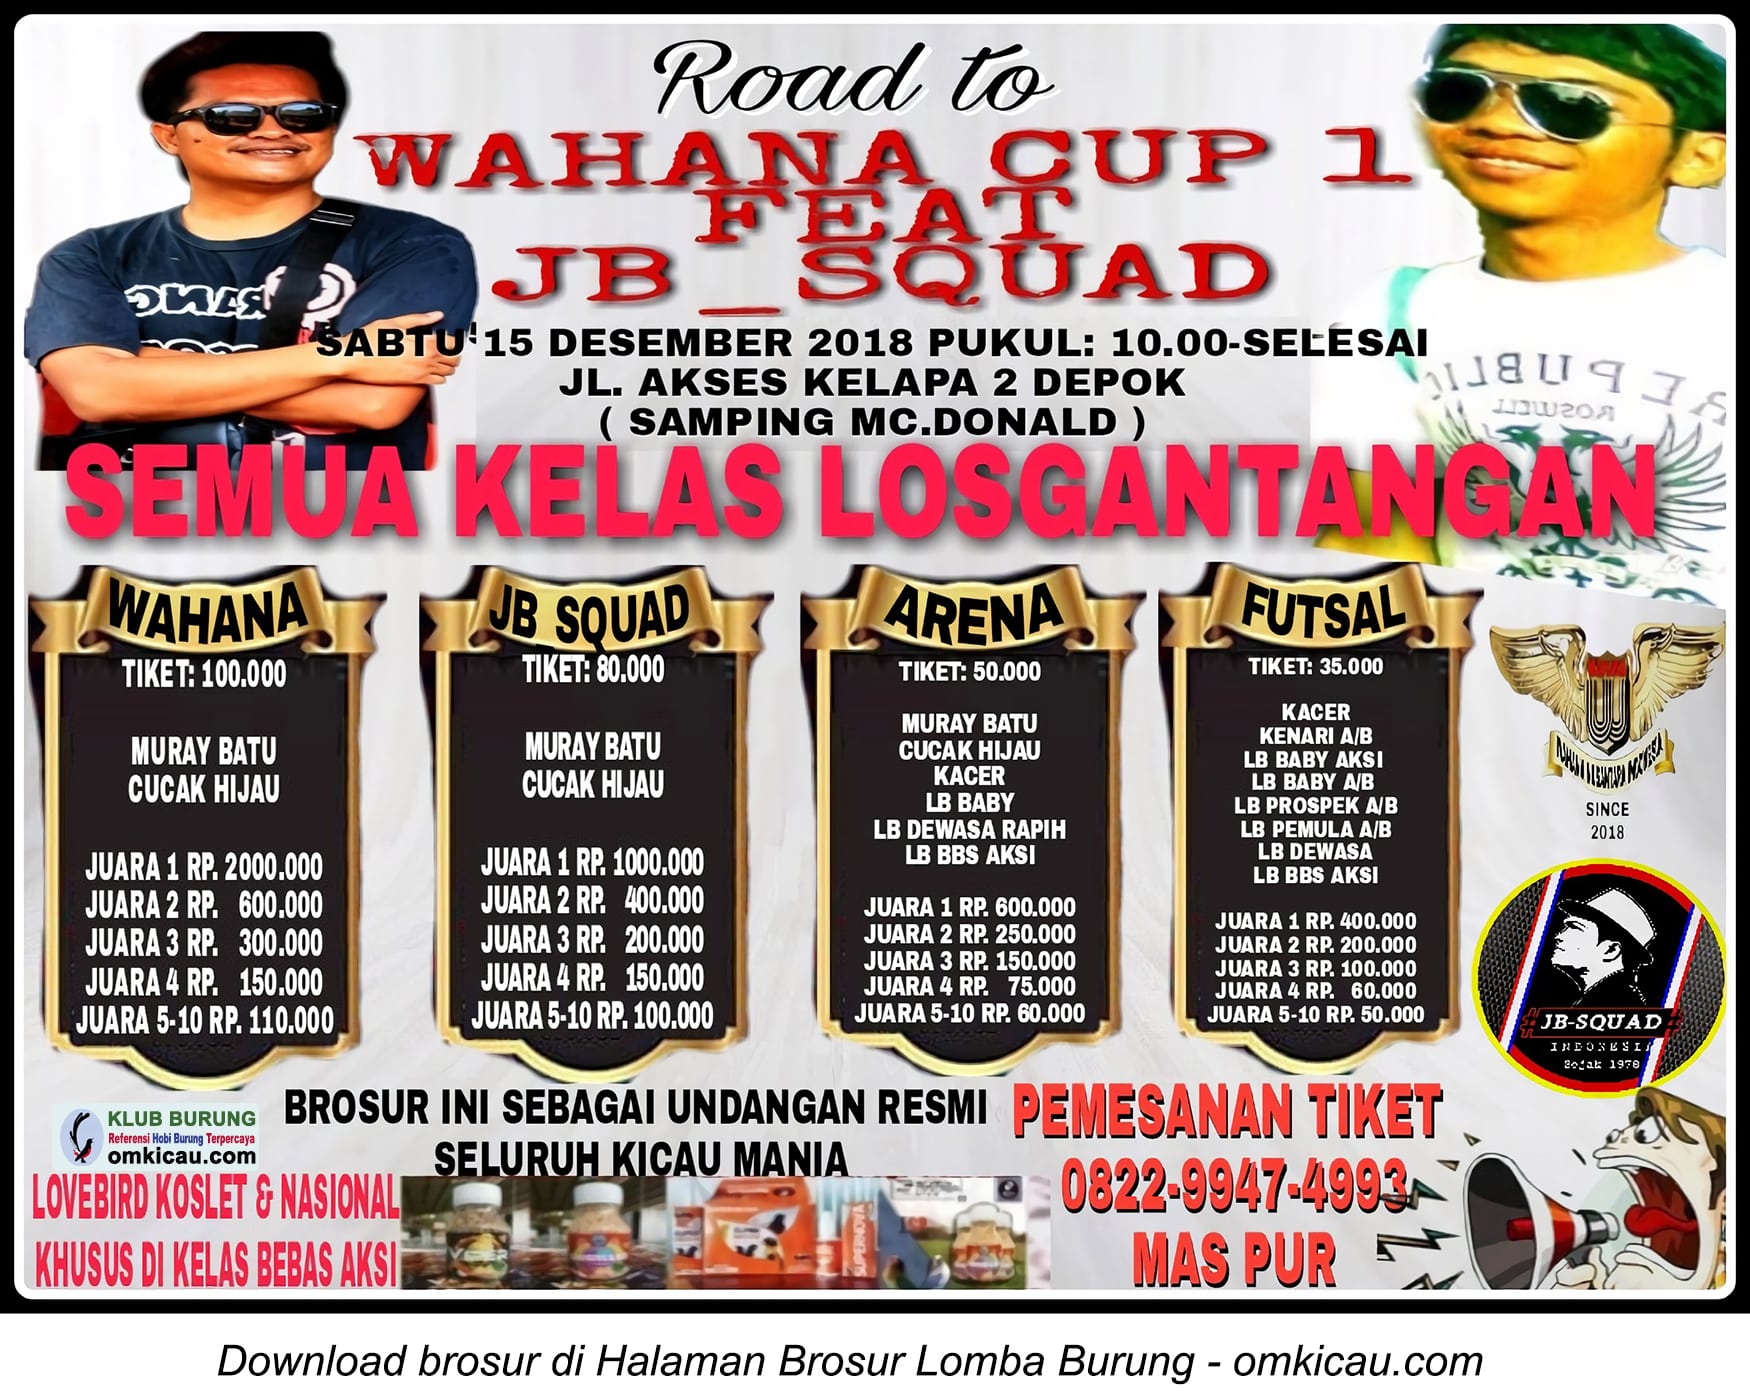 Road to Wahana Cup 1